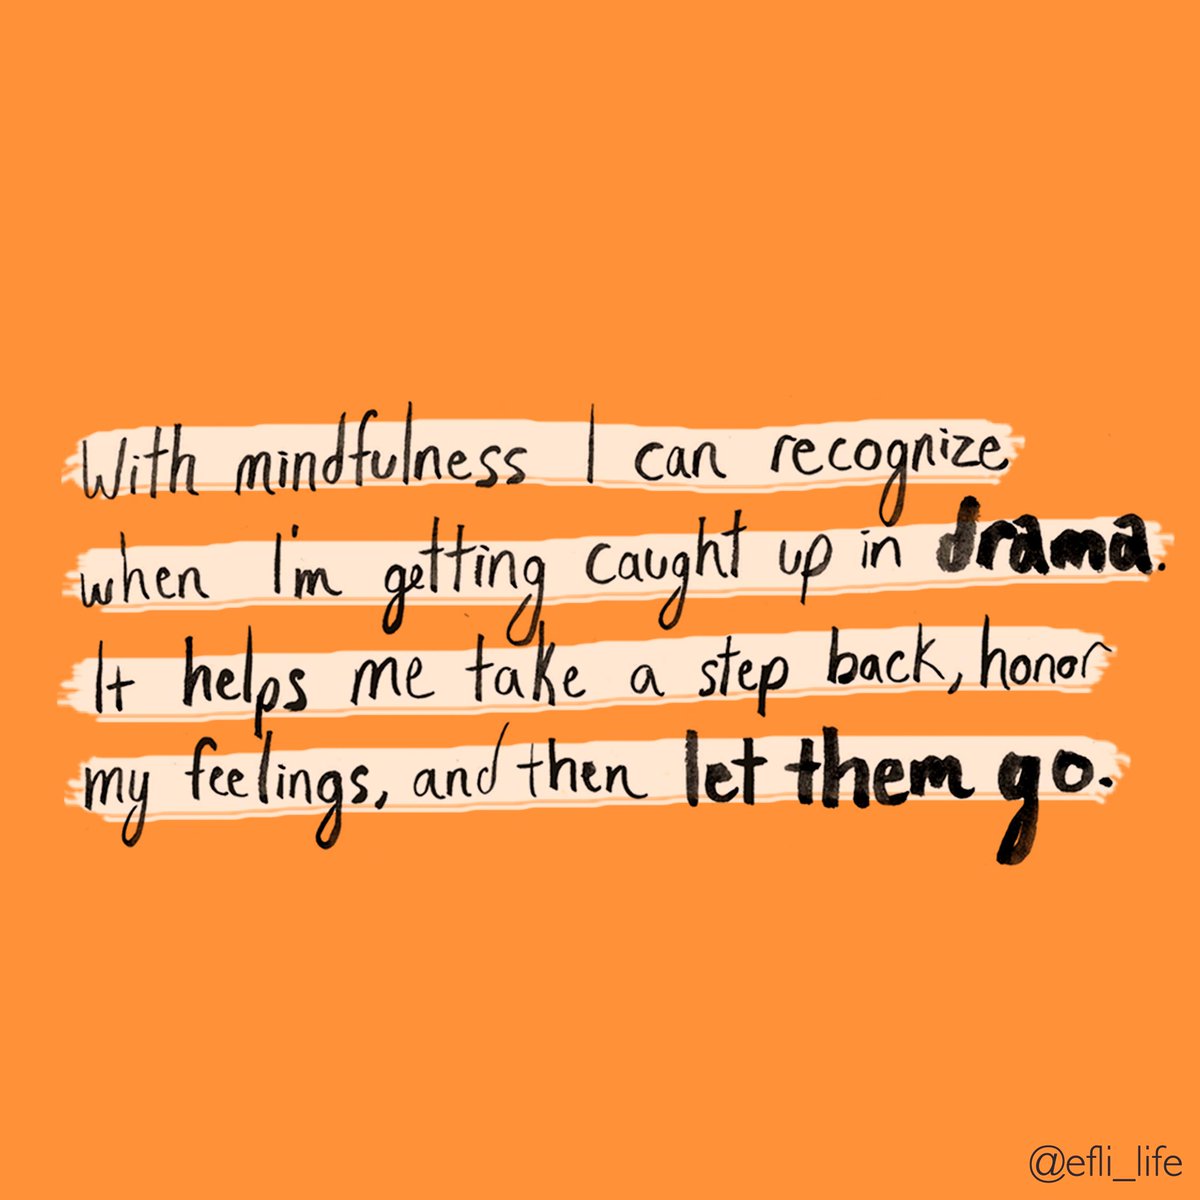 😌
#mindfulnessmonday #mindfuloctober #mindfulpractices #deepbreath #letitgo